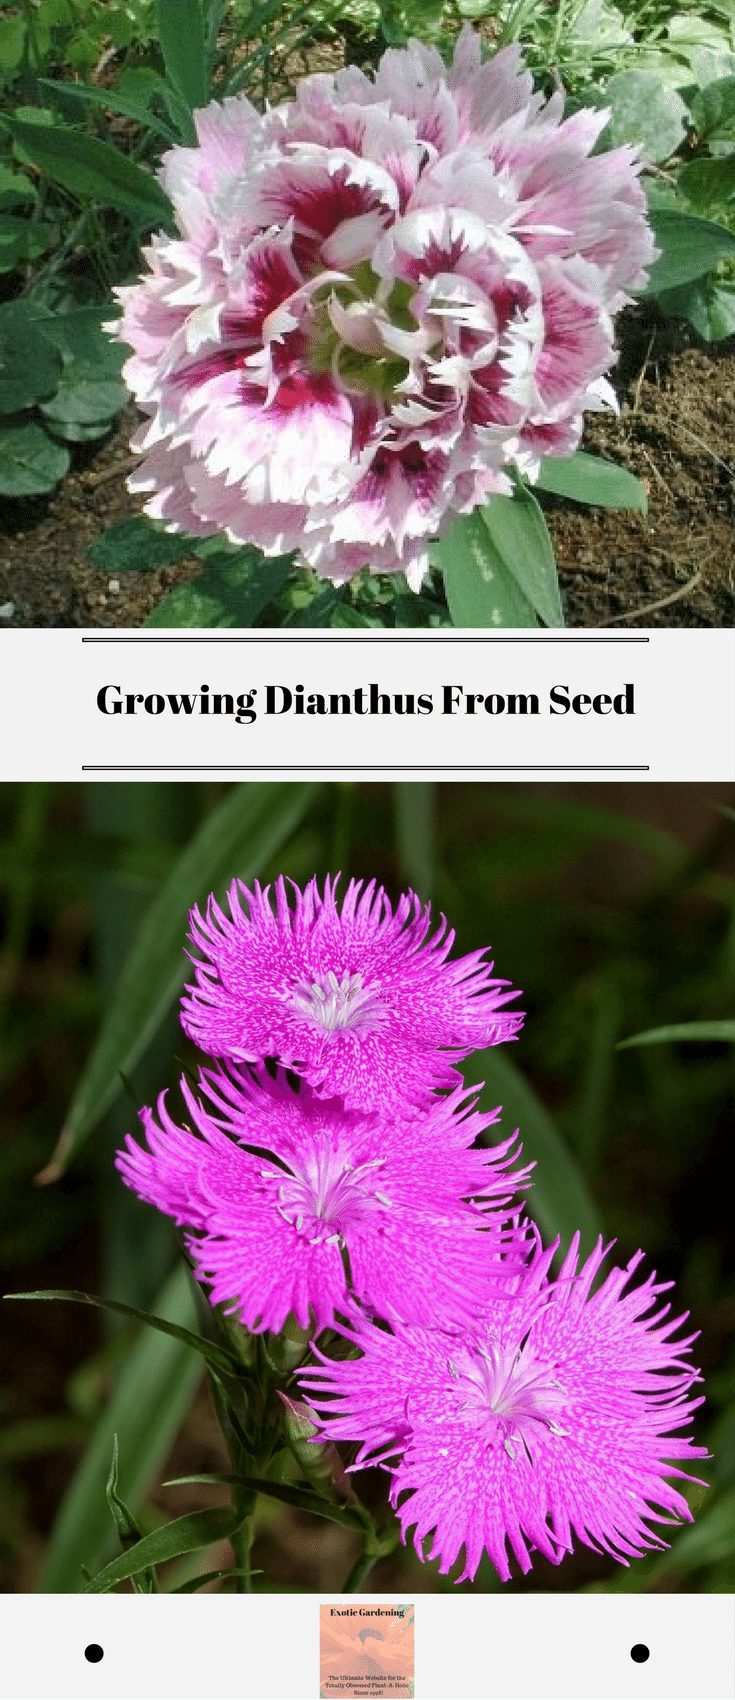 Planting dianthus seeds indoors